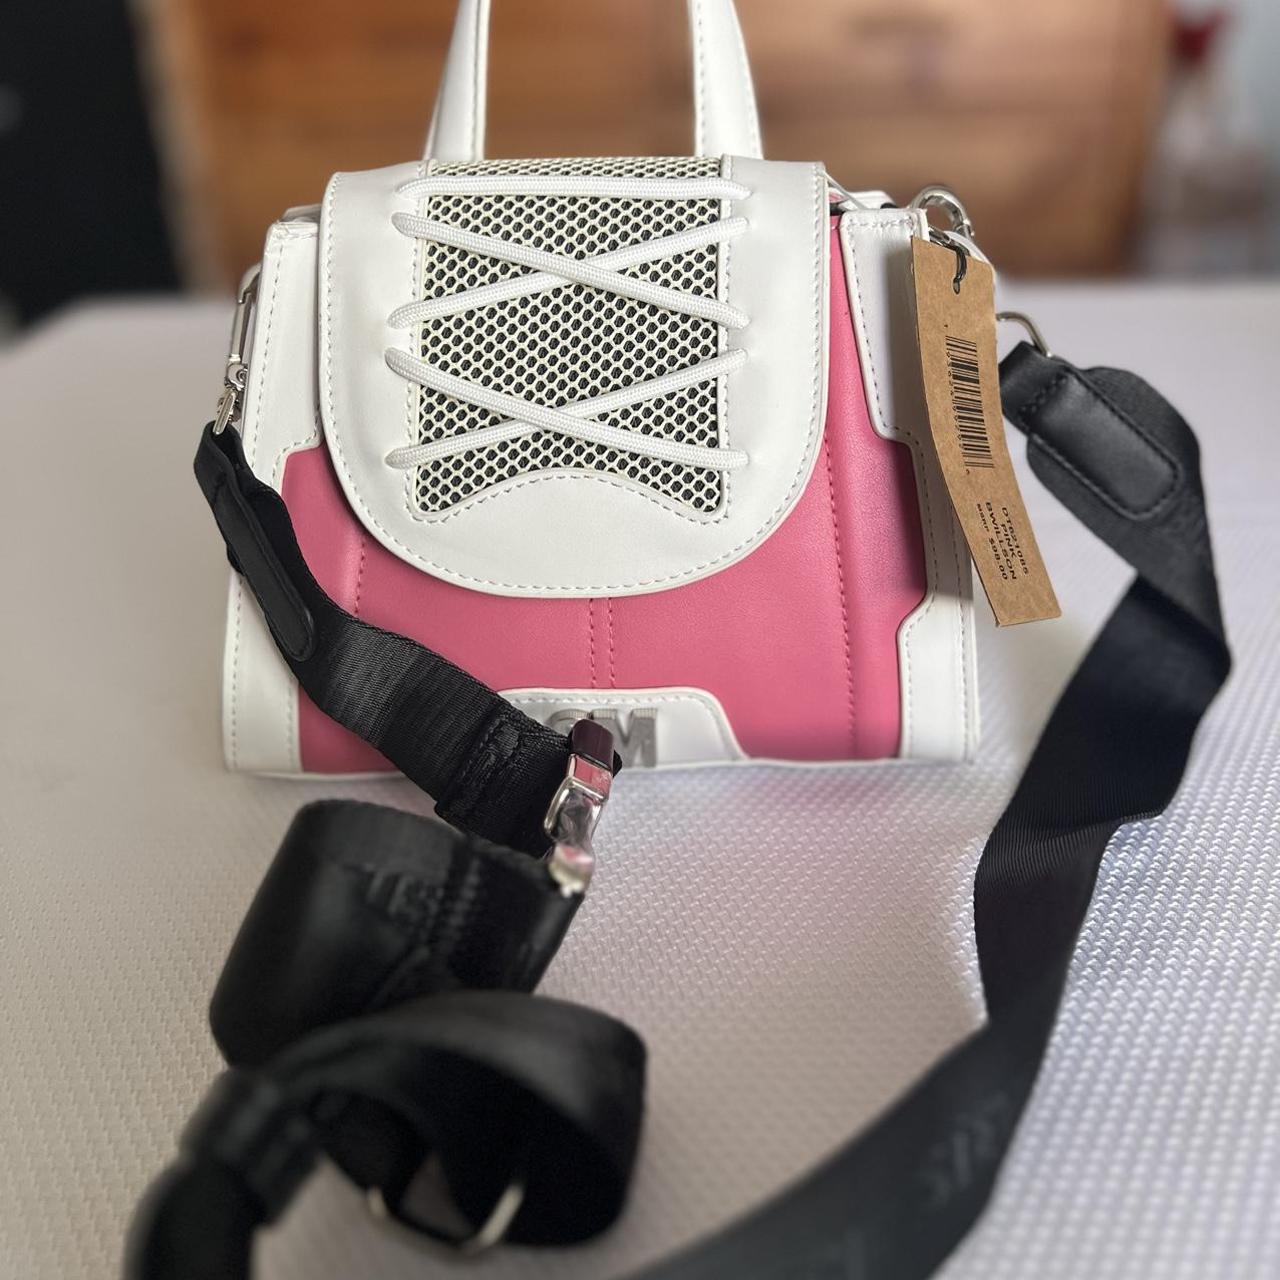 sold New Pink Steve Madden Crossbody Bag Purse Y2K - Depop